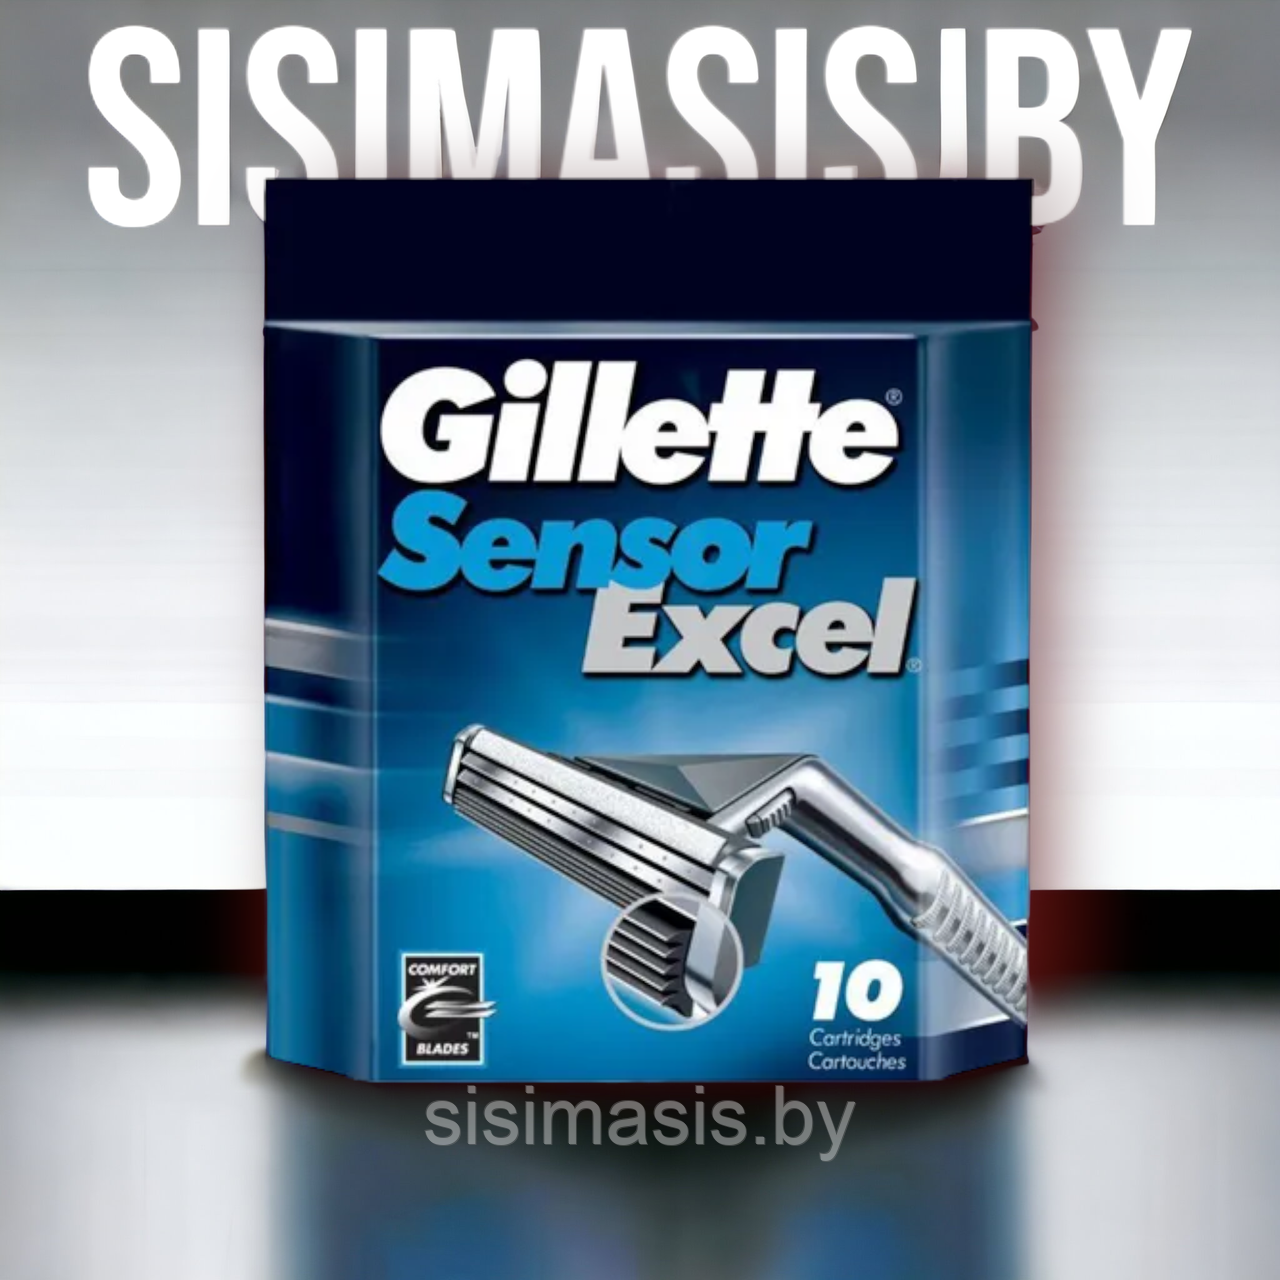 Кассета для станка "Gillette Sensor Excel" (10 шт.)